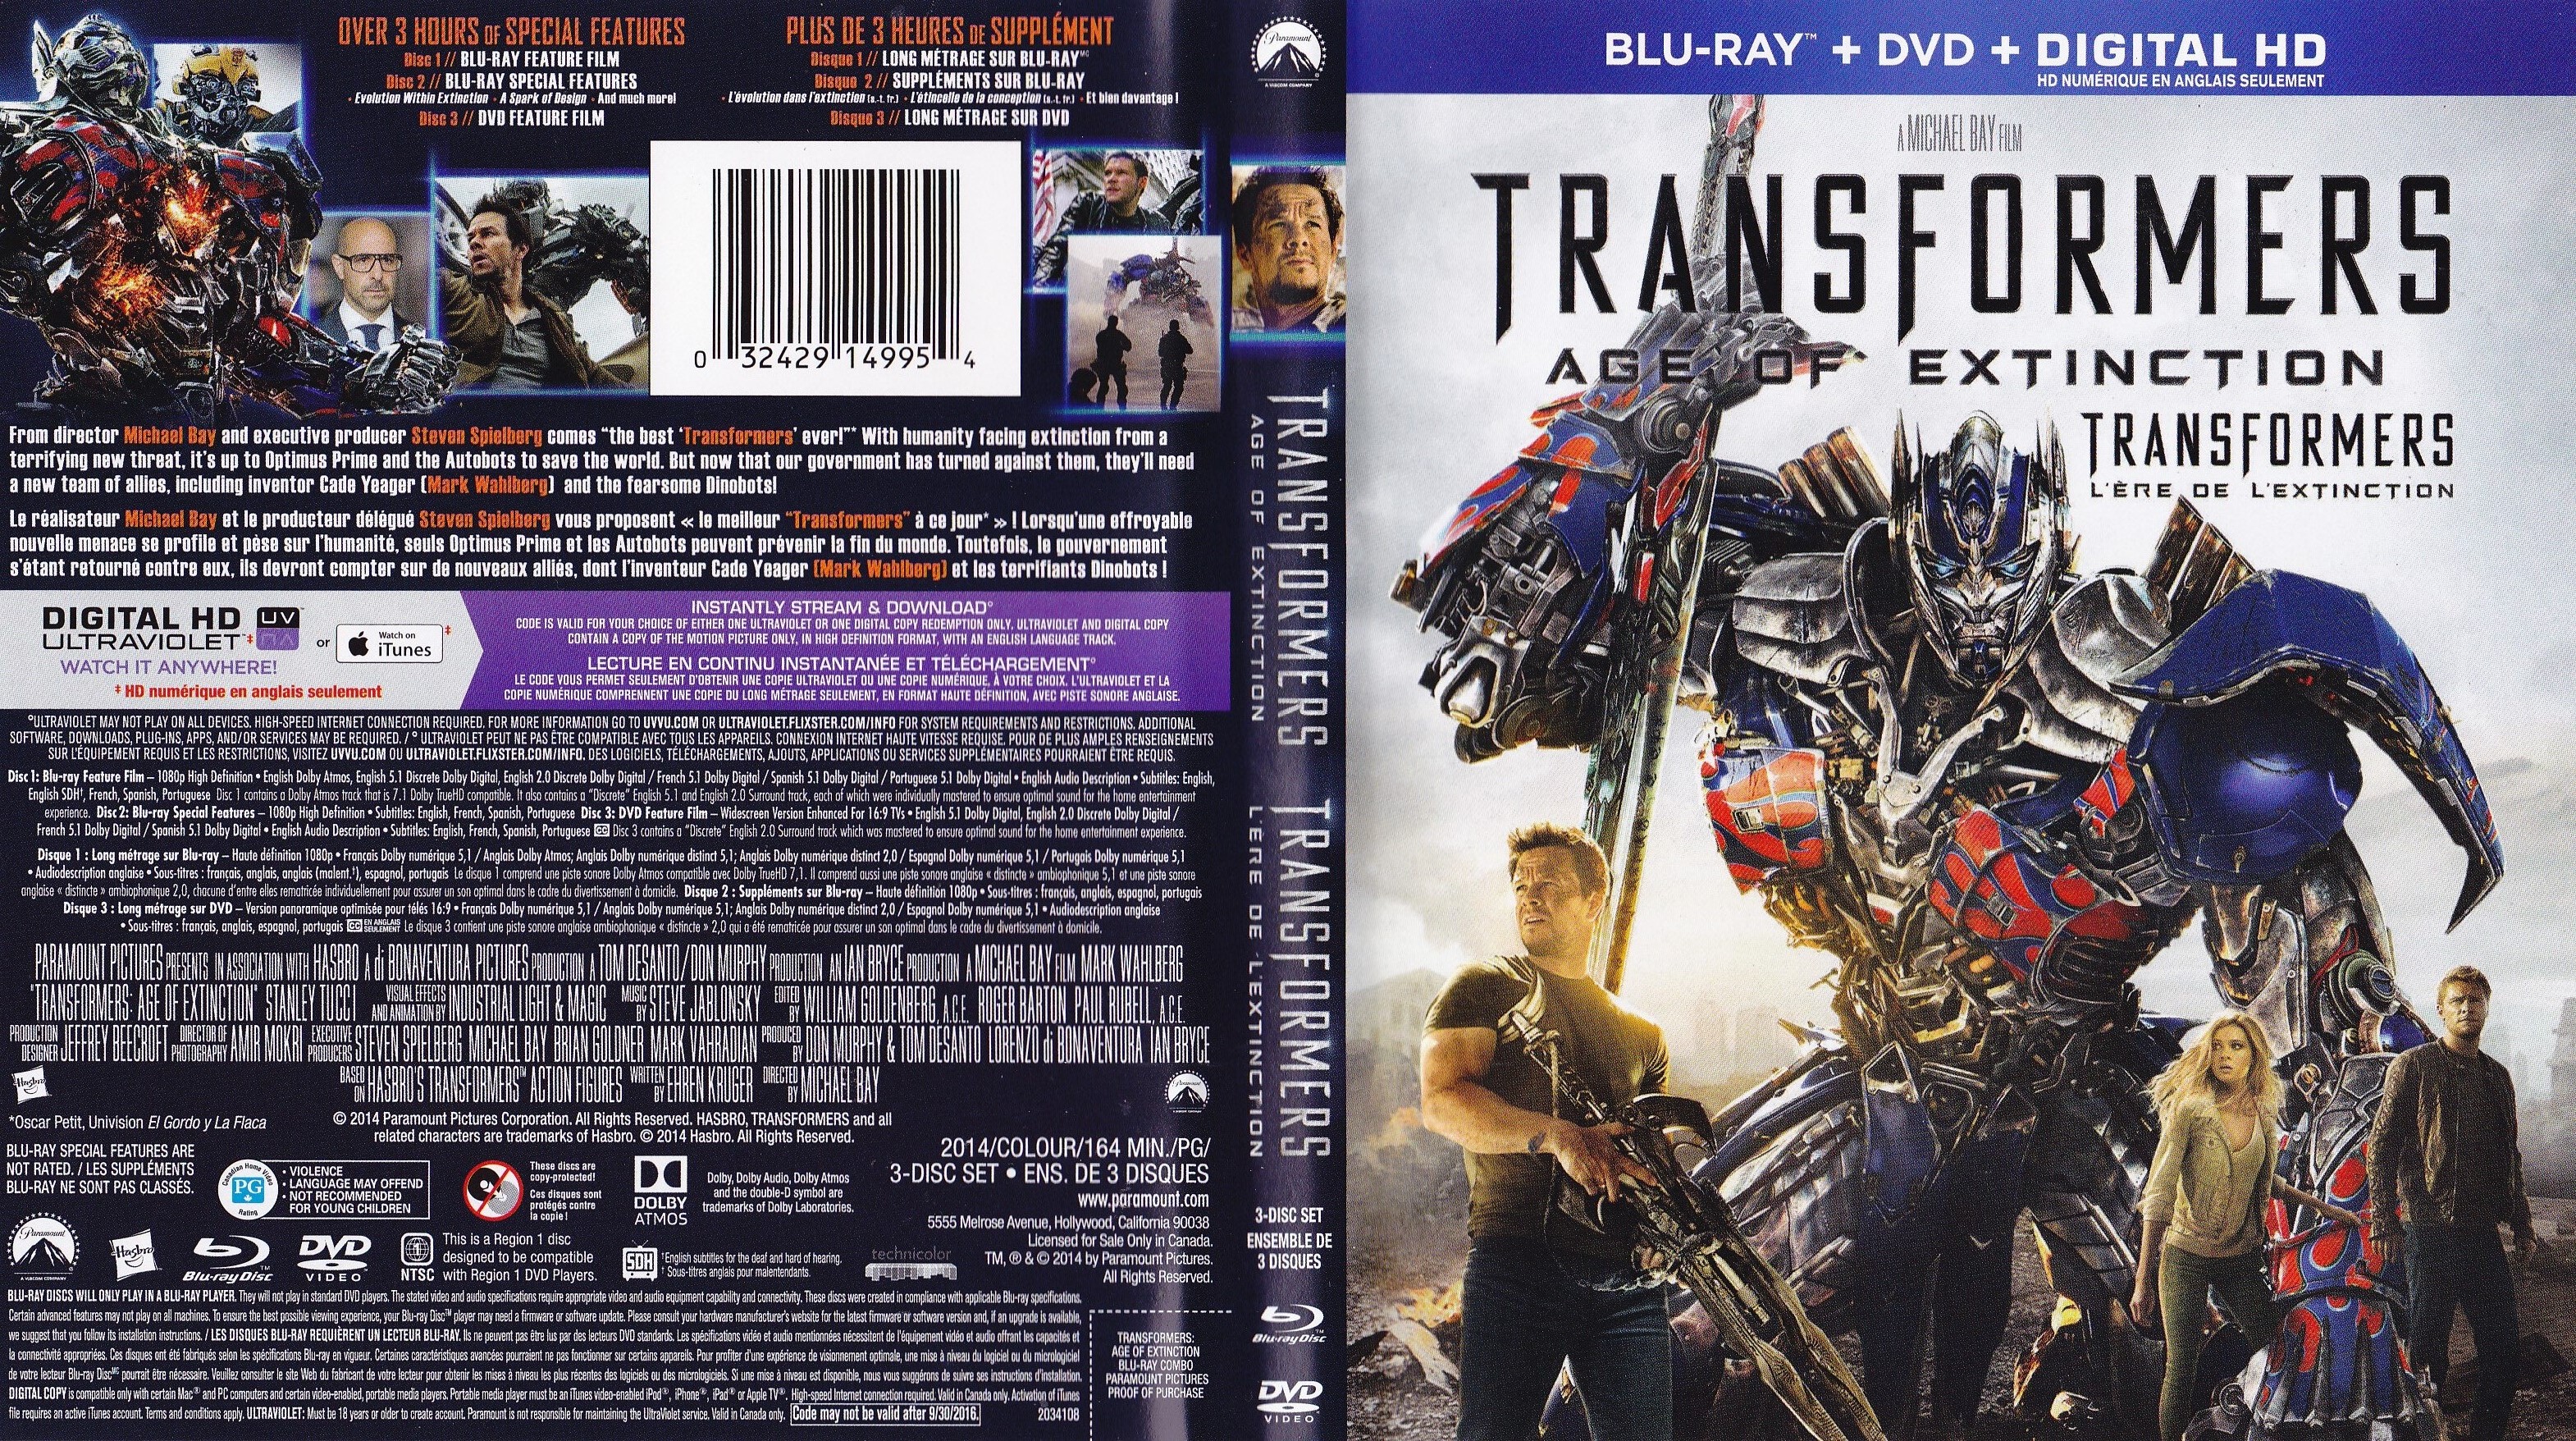 Jaquette DVD Transformer - l